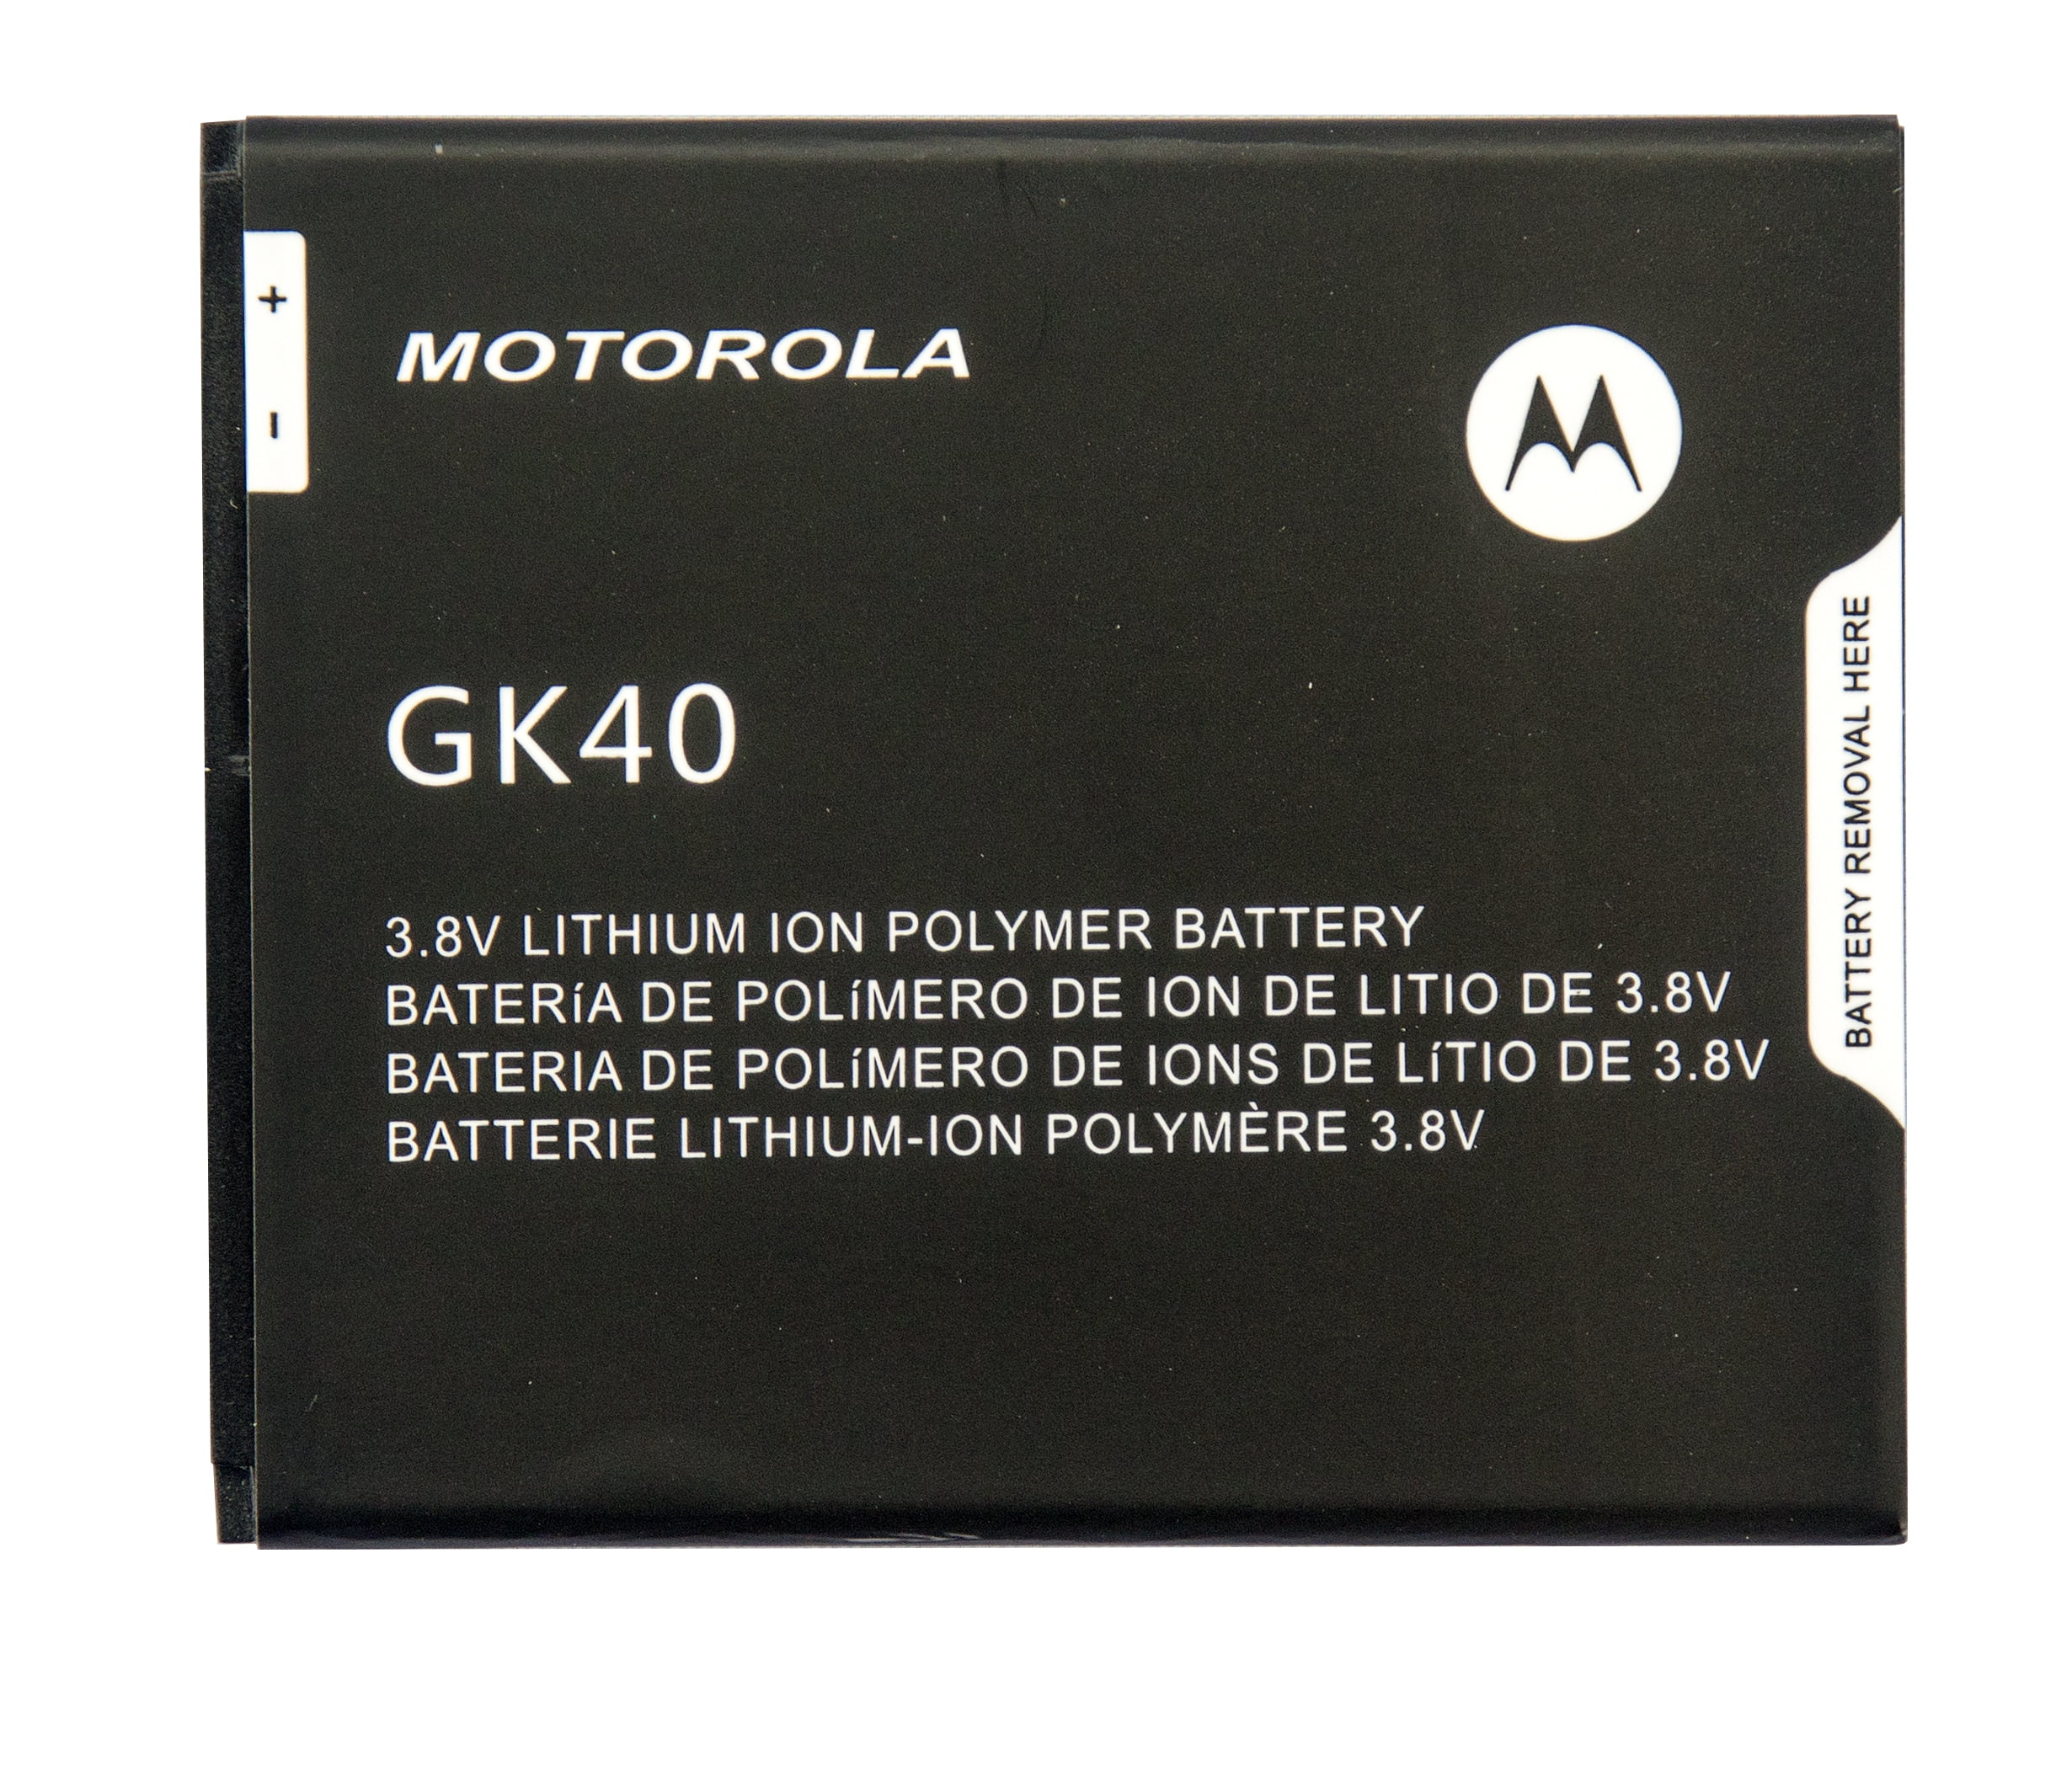  ASDAWN GK40 Battery Replacement for Motorola, Moto G4